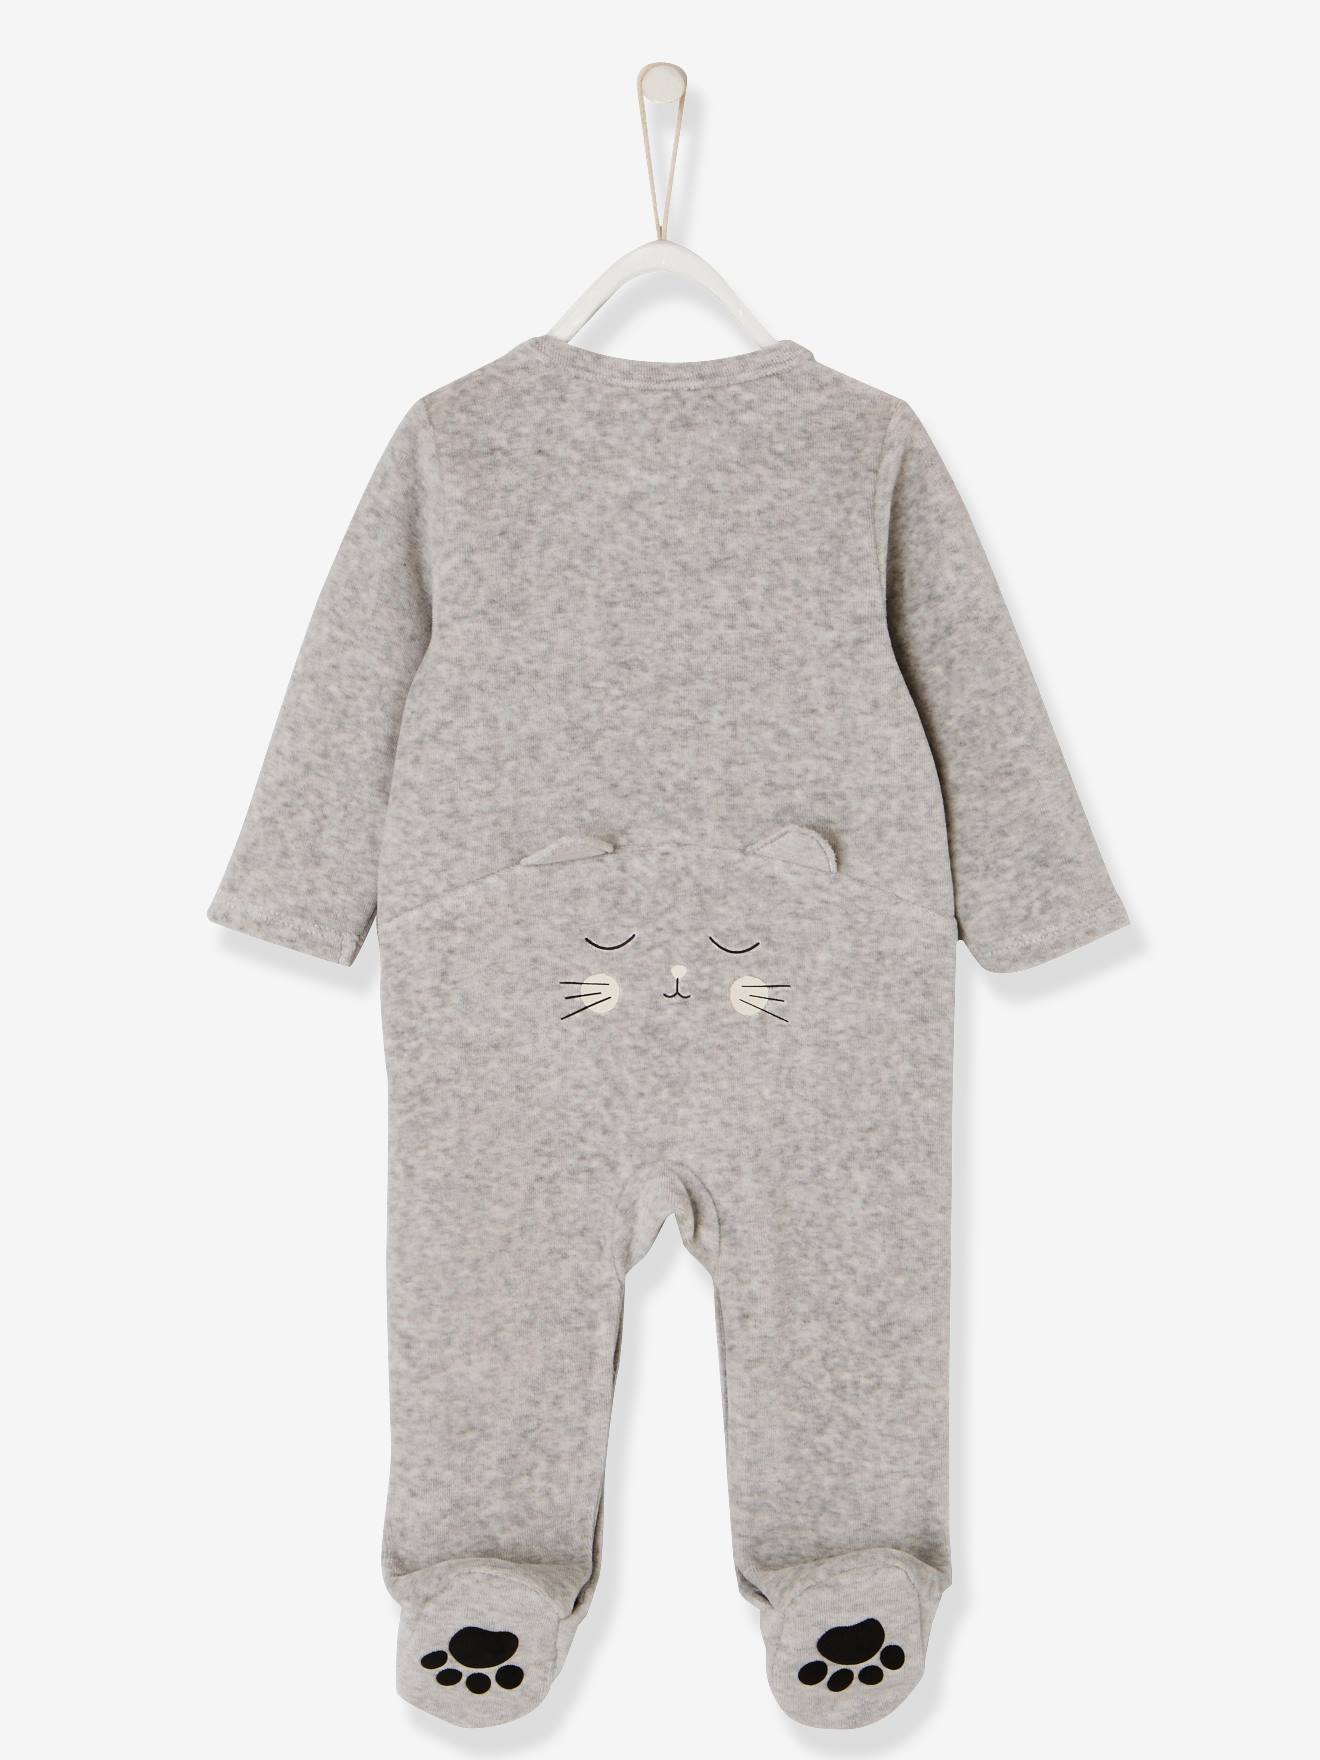 Geloofsbelijdenis leiderschap terrorisme Babies' Velour Pyjamas, Organic Collection, with Decorative detail on the  Back - light grey, Baby